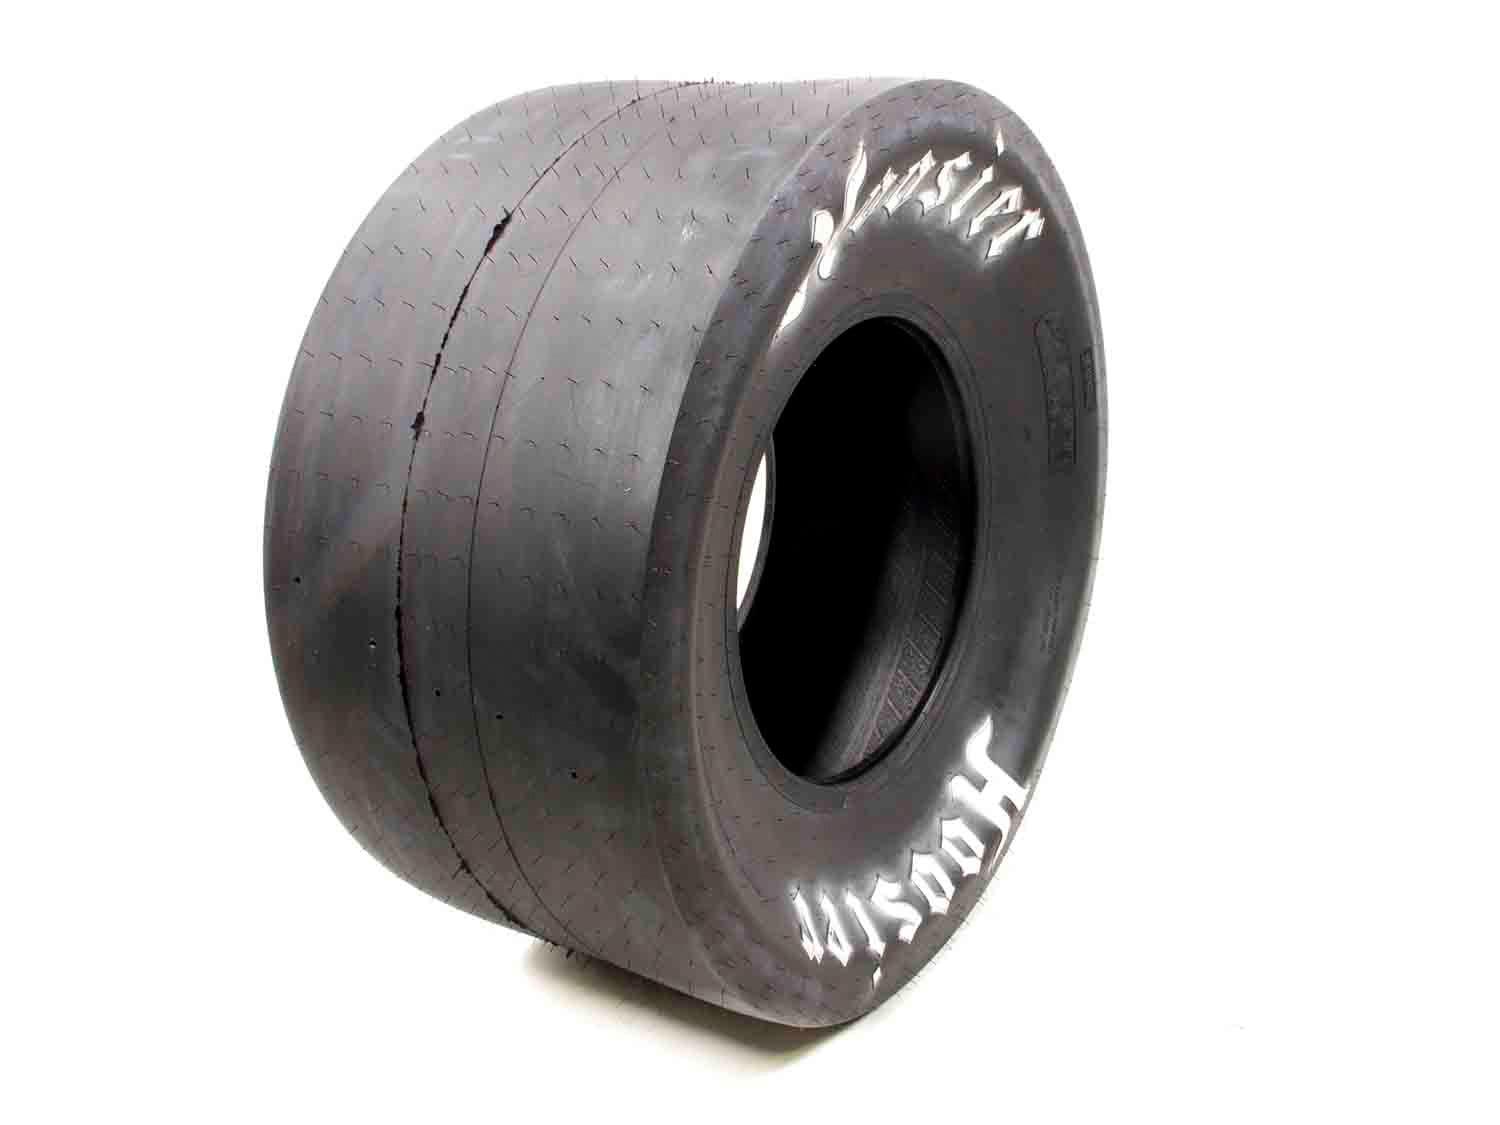 32.0/14-15 Drag Tire - Burlile Performance Products